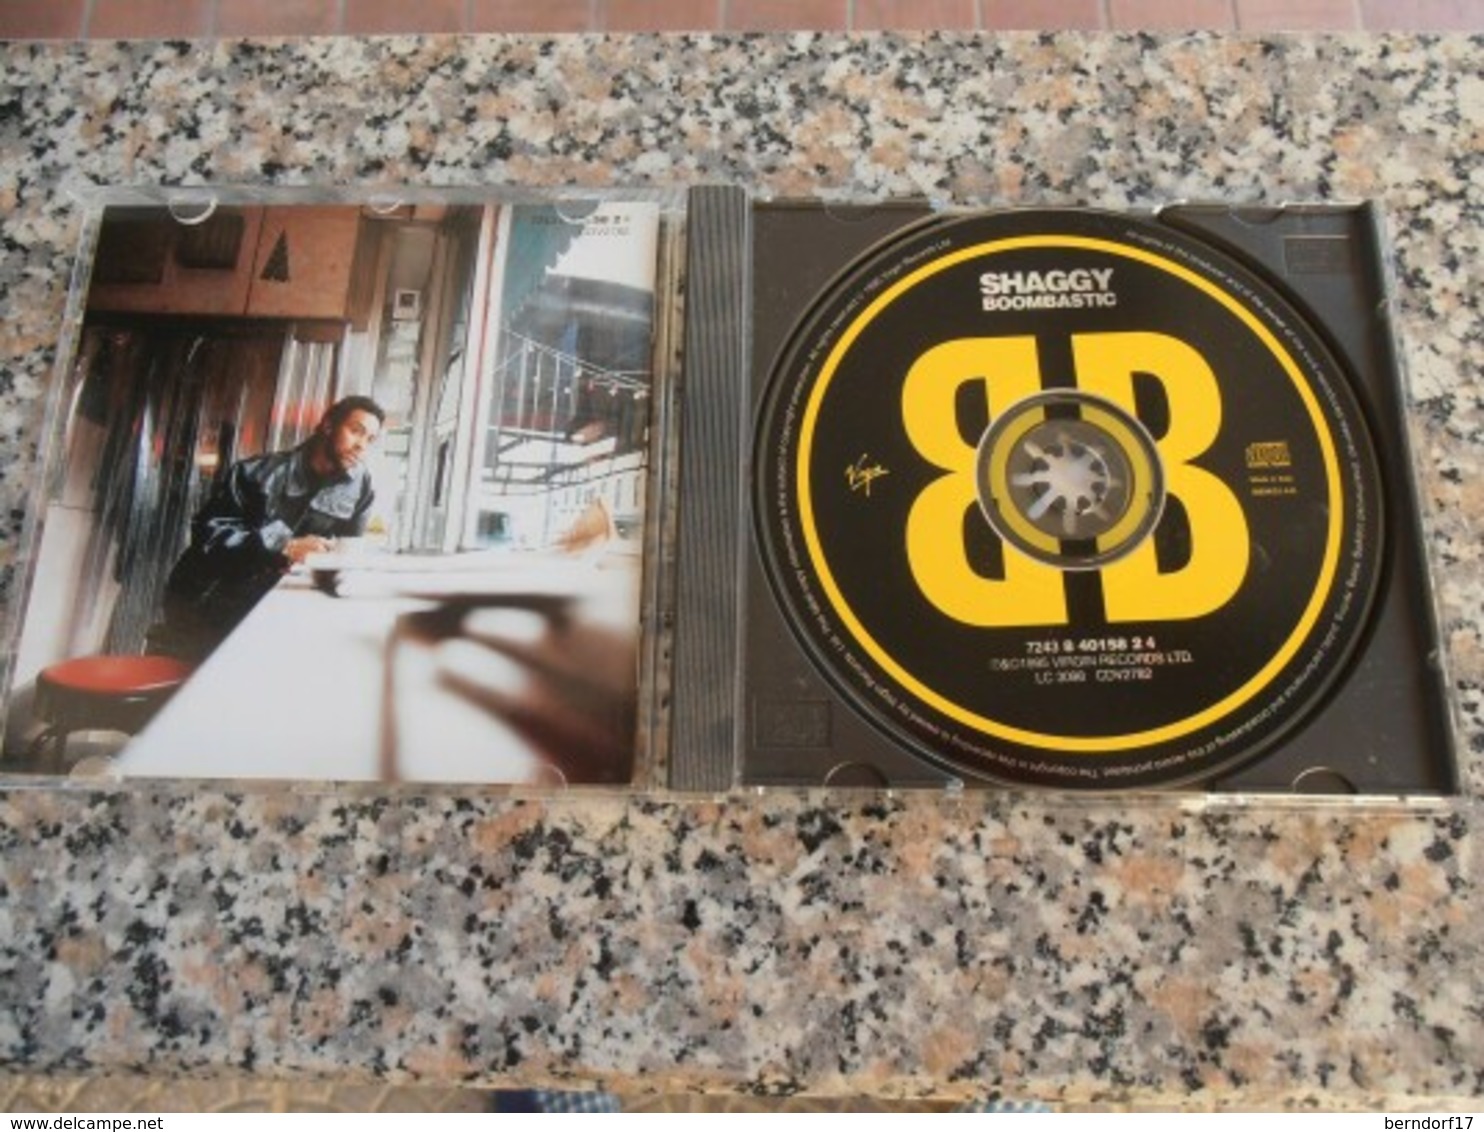 Shaggy - Boombastic - CD - Reggae